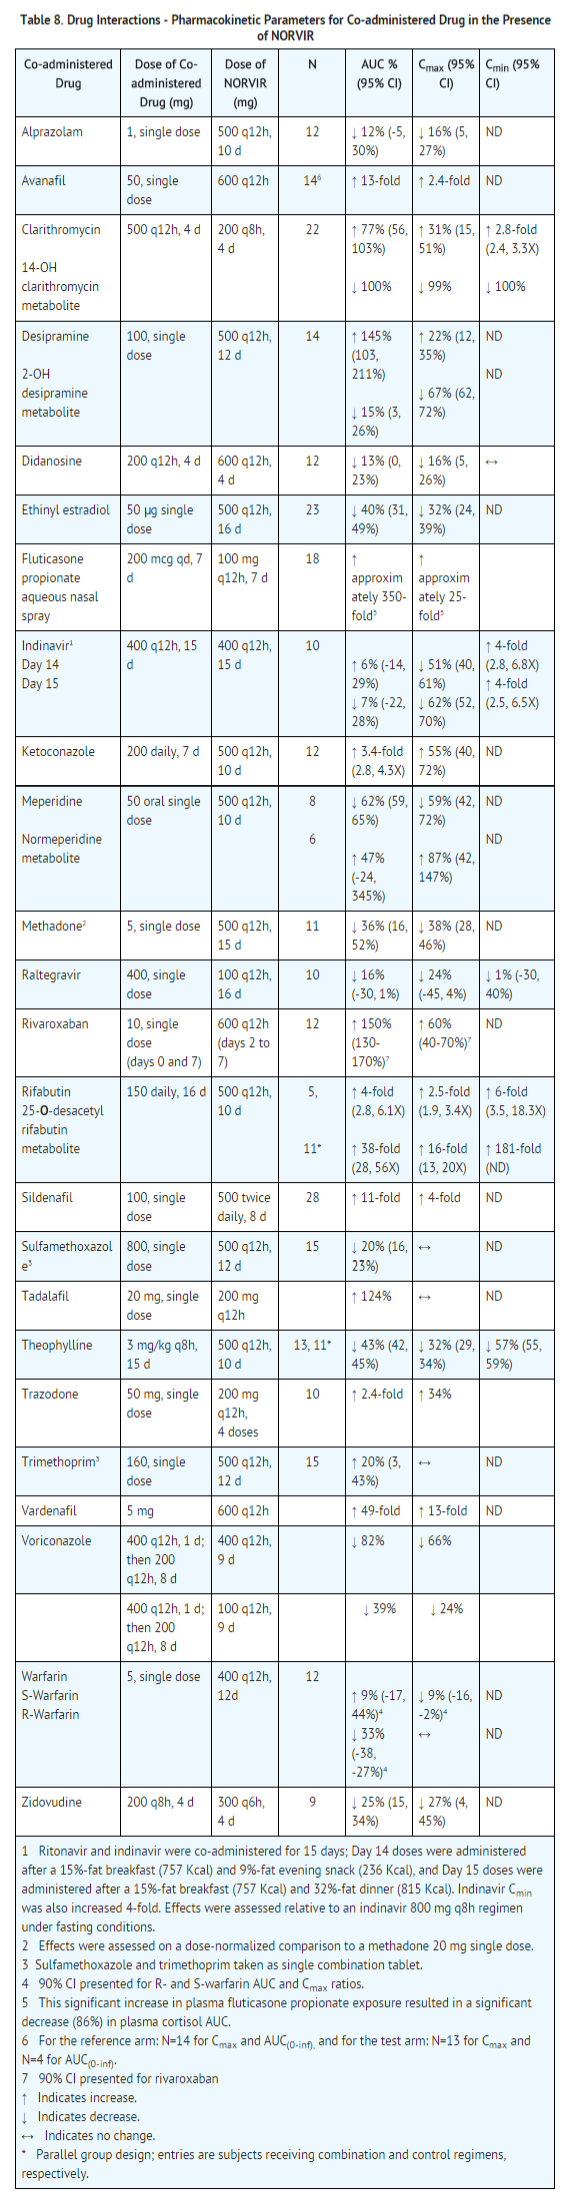 File:Ritonavir Pharmacokynetics table 3.png